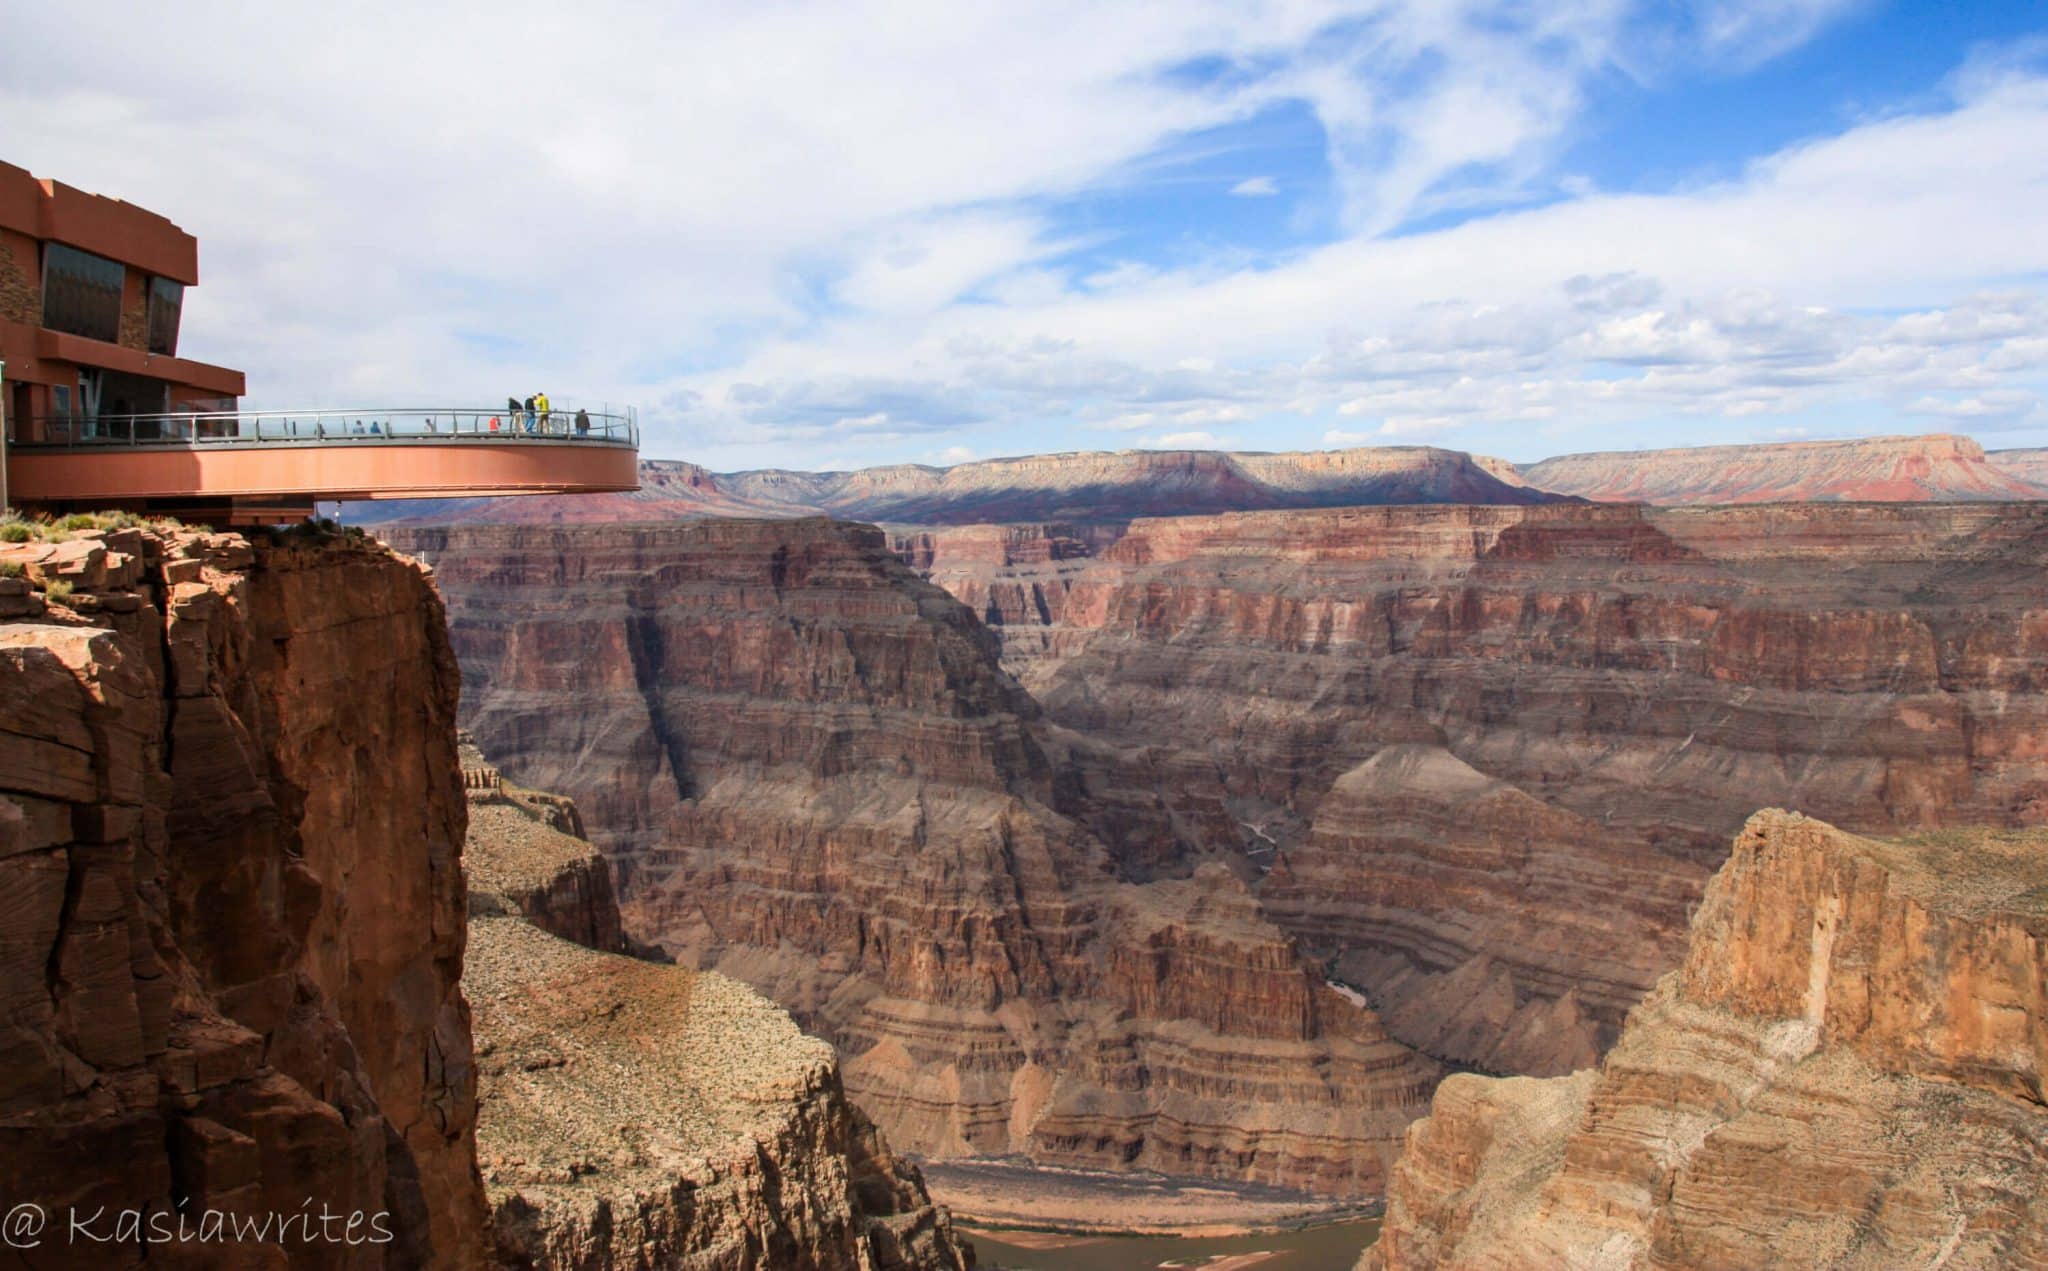 Visiting the spectacular Grand Canyon National Park | kasiawrites